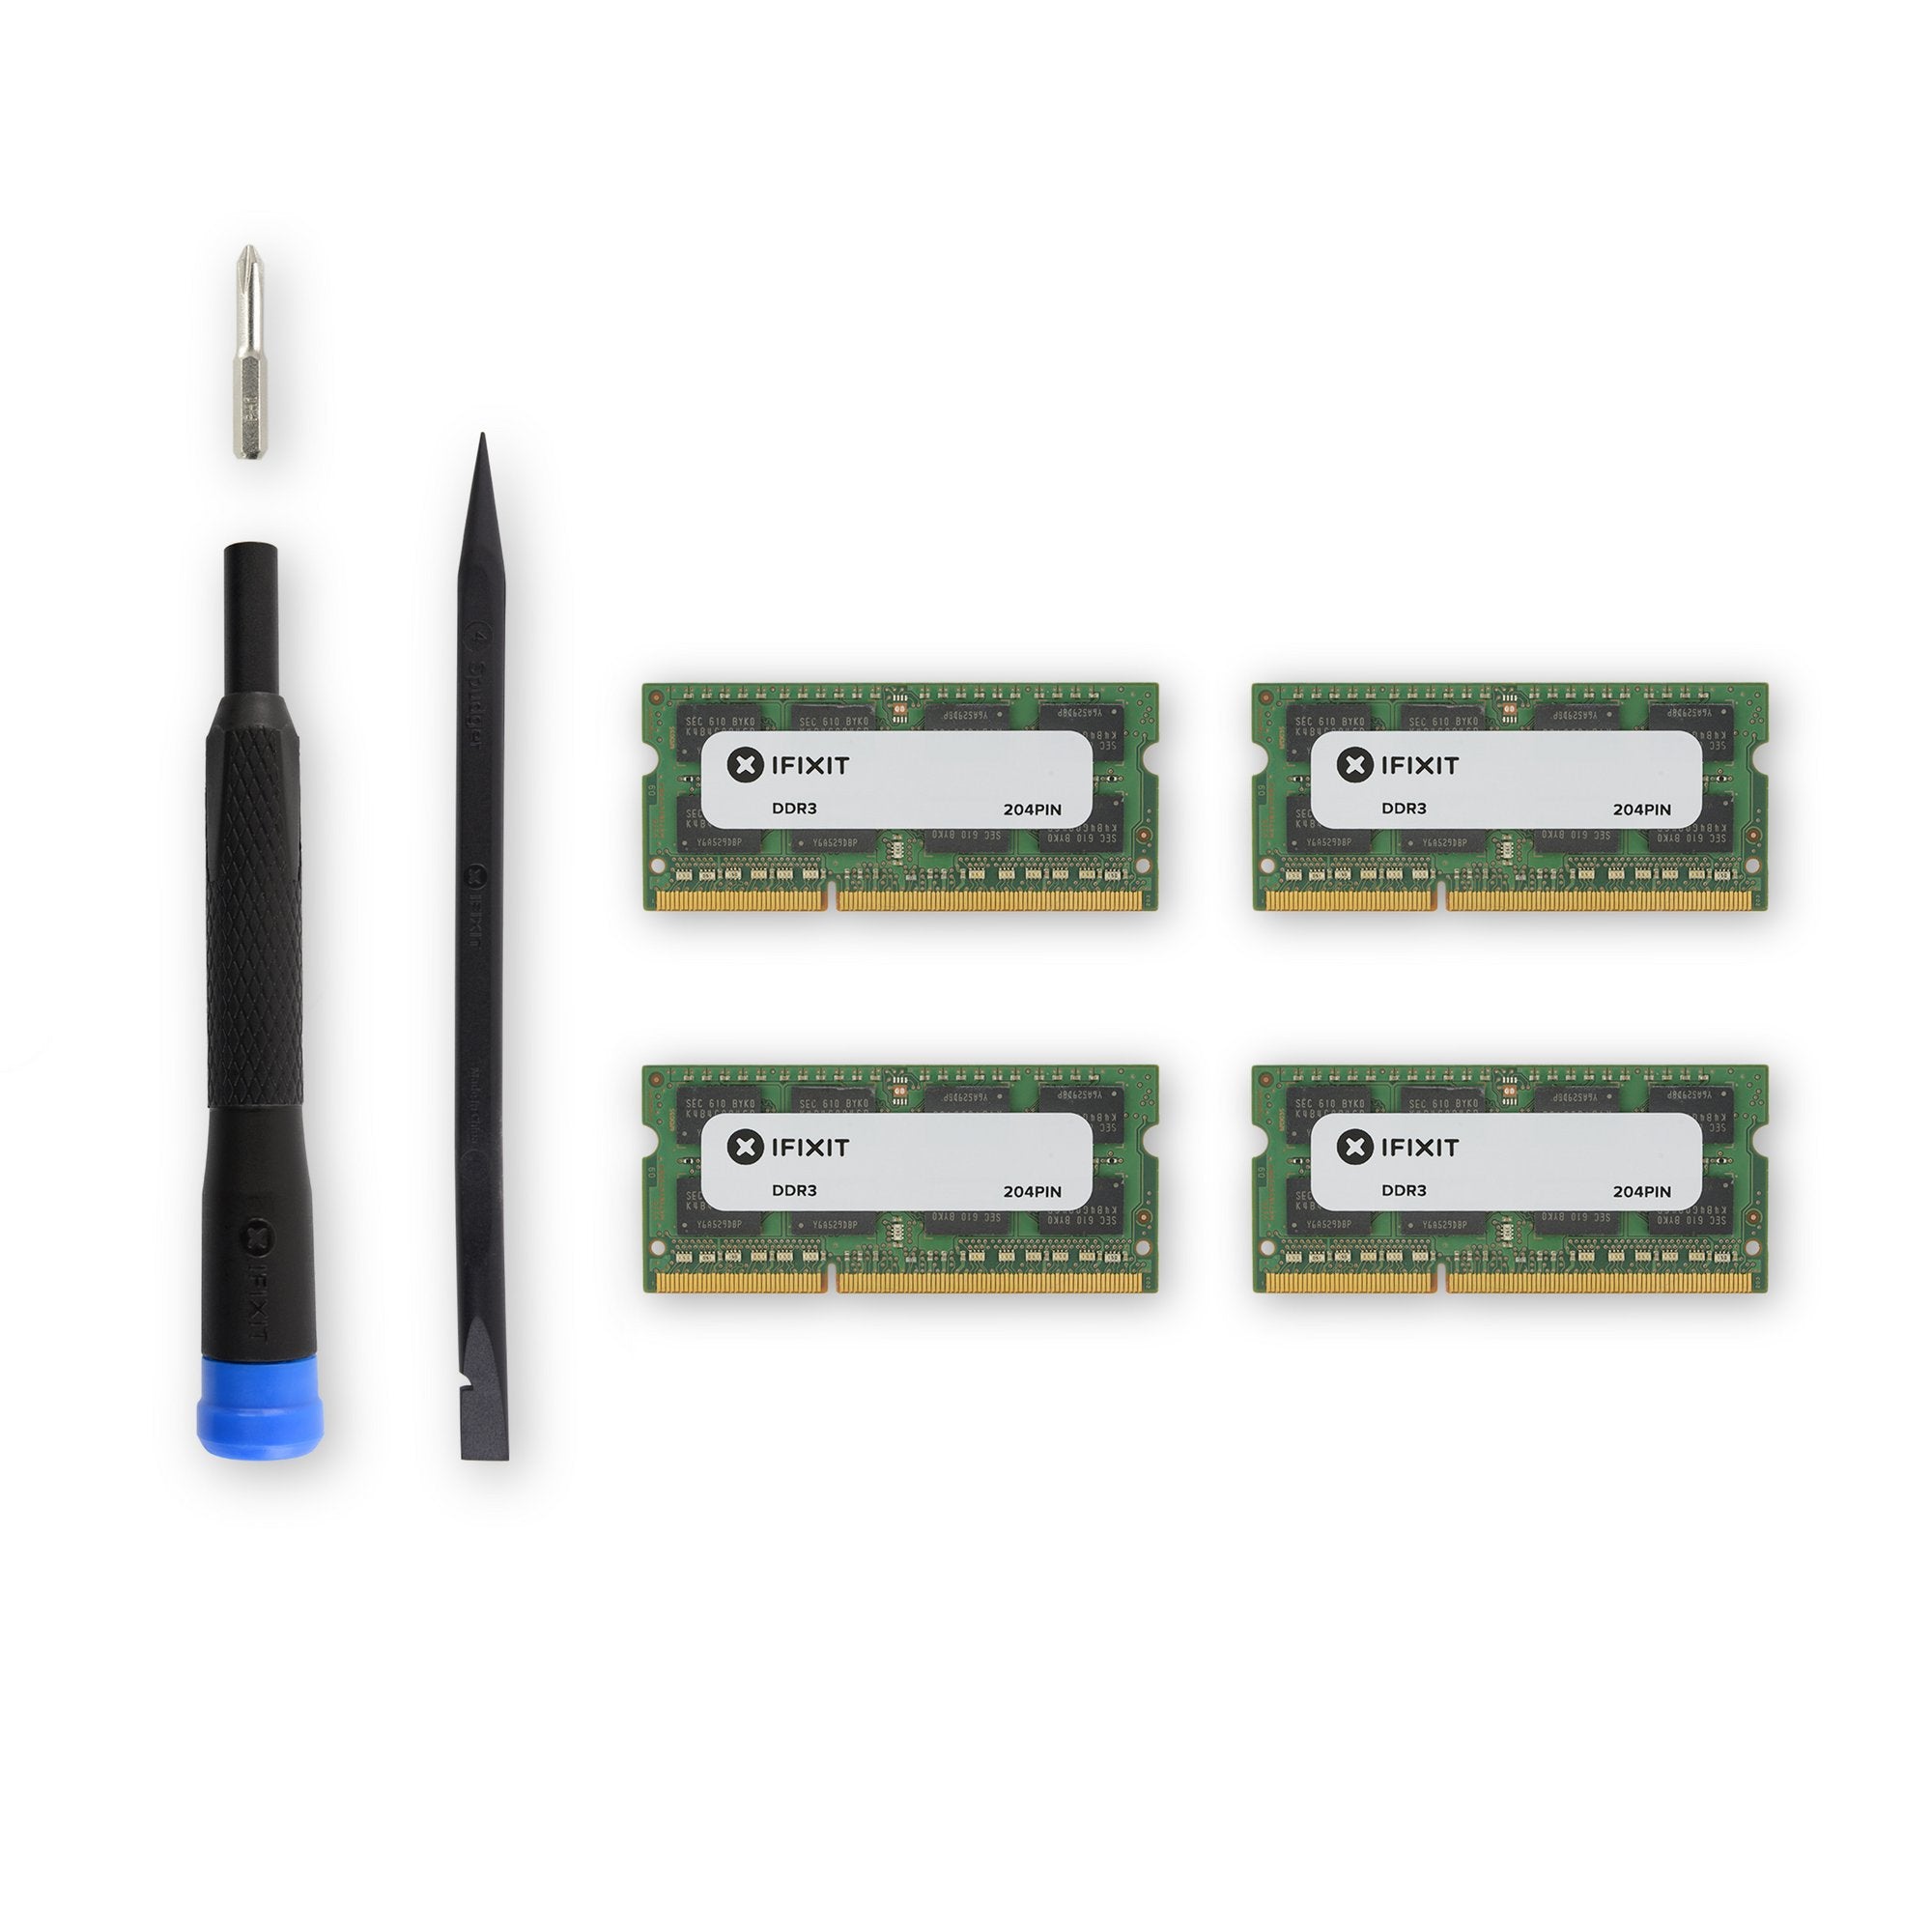 iMac Intel 27" EMC 2309 (Late 2009) Memory Maxxer RAM Upgrade Kit